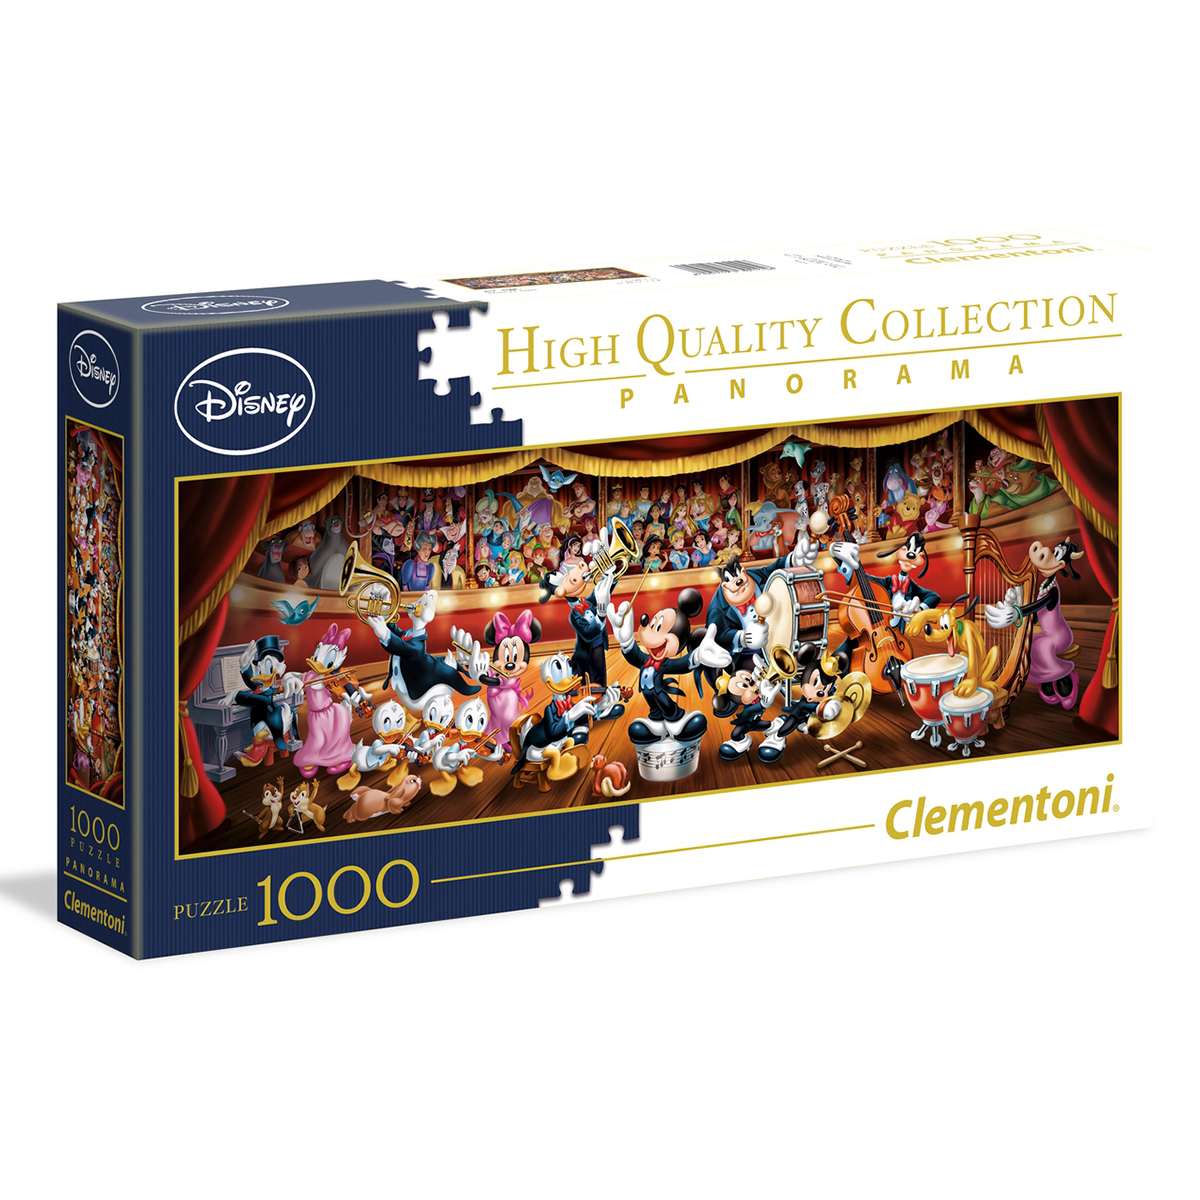 Puzzle Clementoni Orquesta Disney Panorama de 1000 piezas